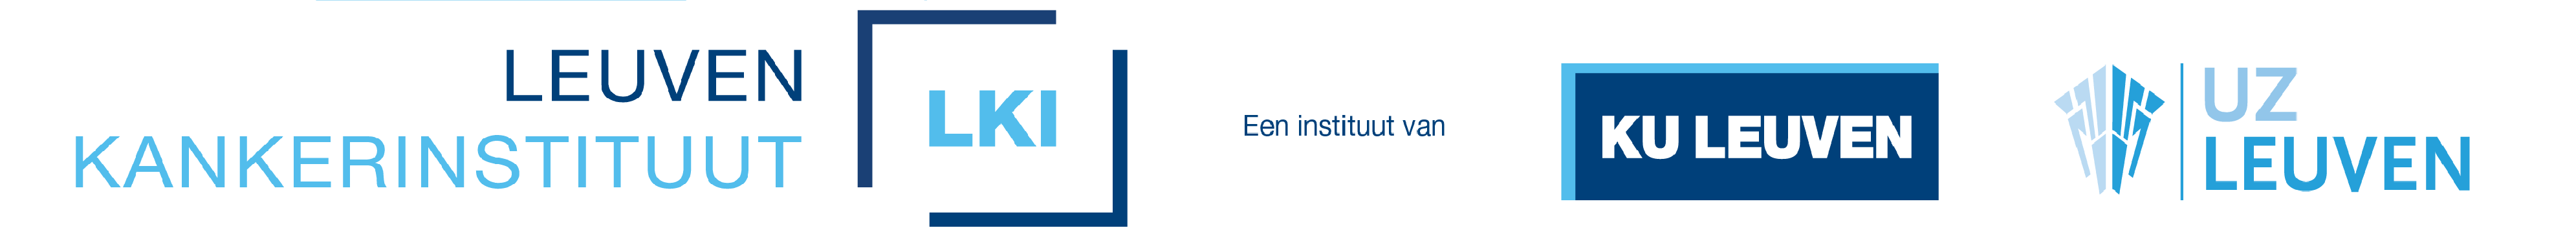 Leuvenskankerinstituut banner